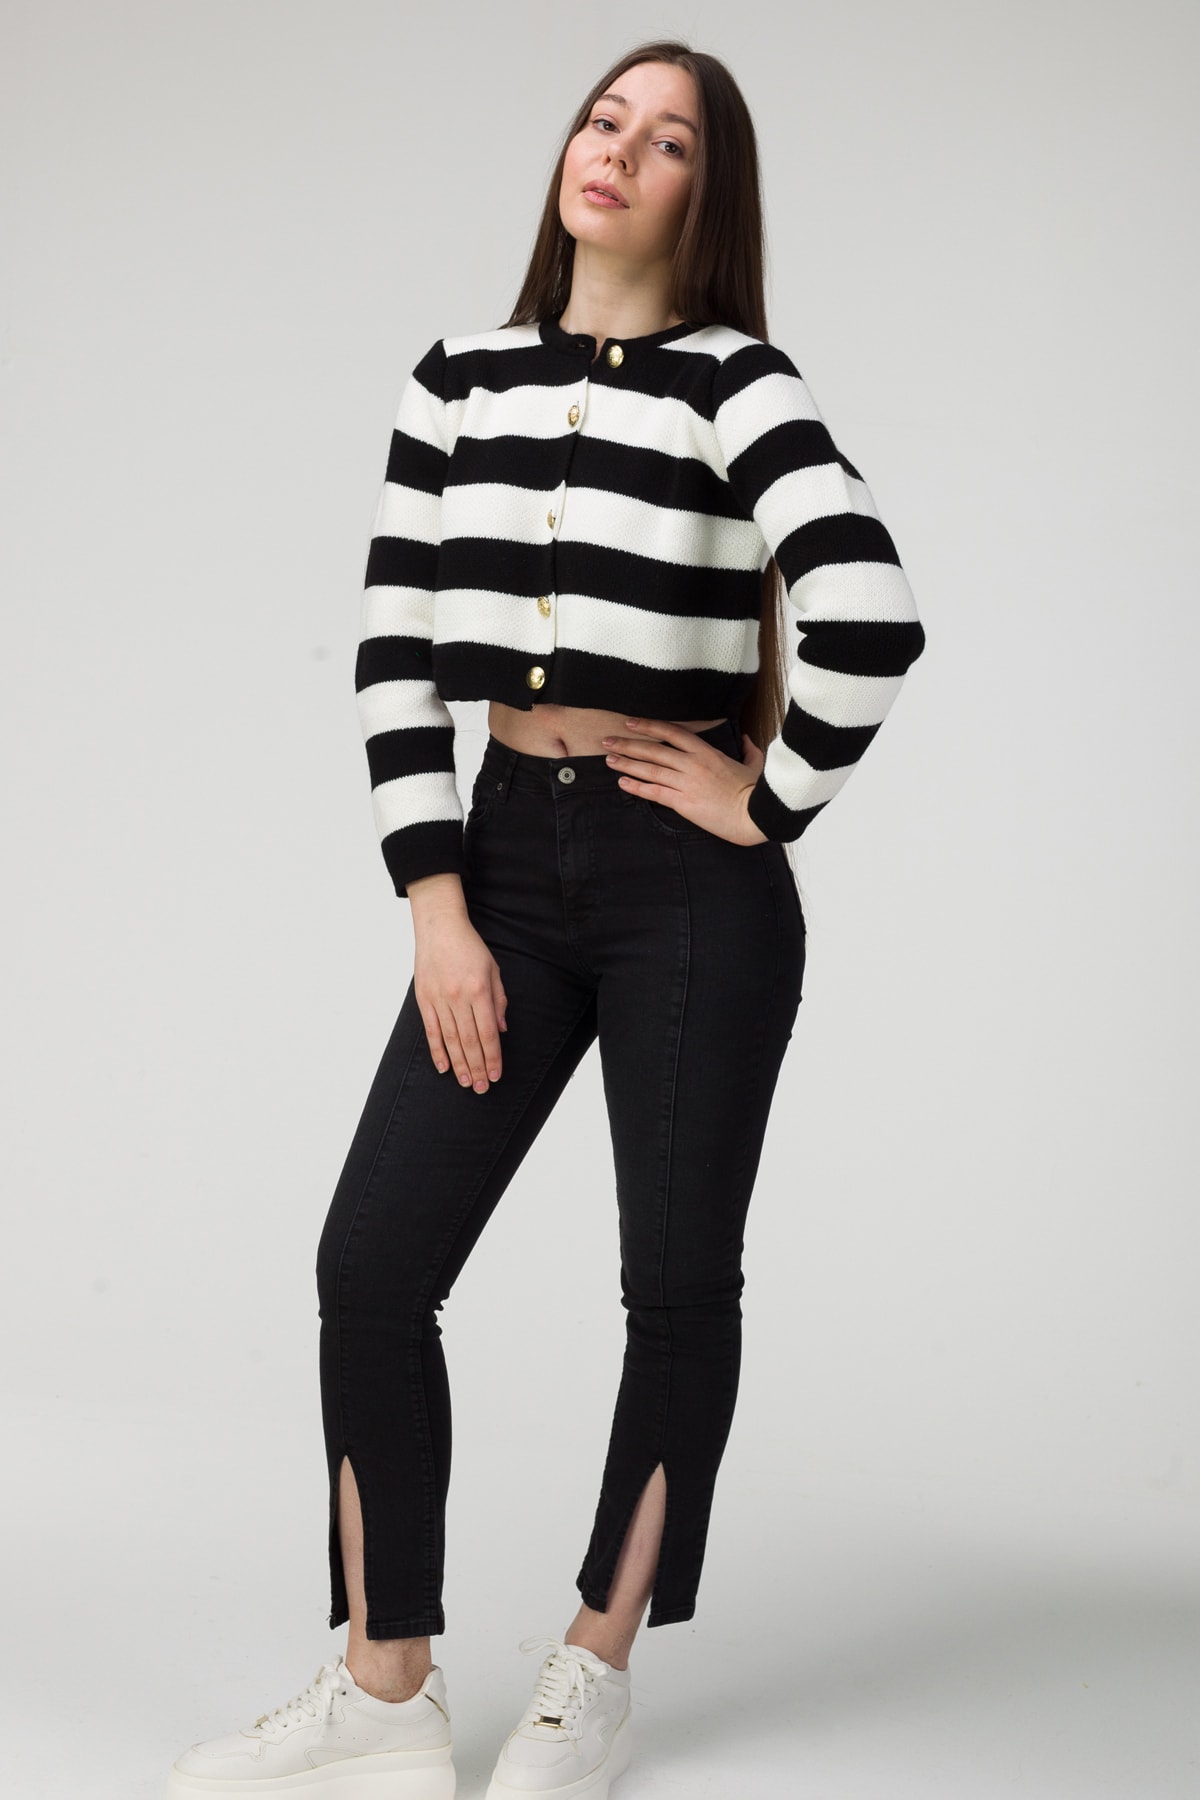 Levně MODAGEN Women's Black and White Striped Gold Buttons Knitwear Cardigan Sweater